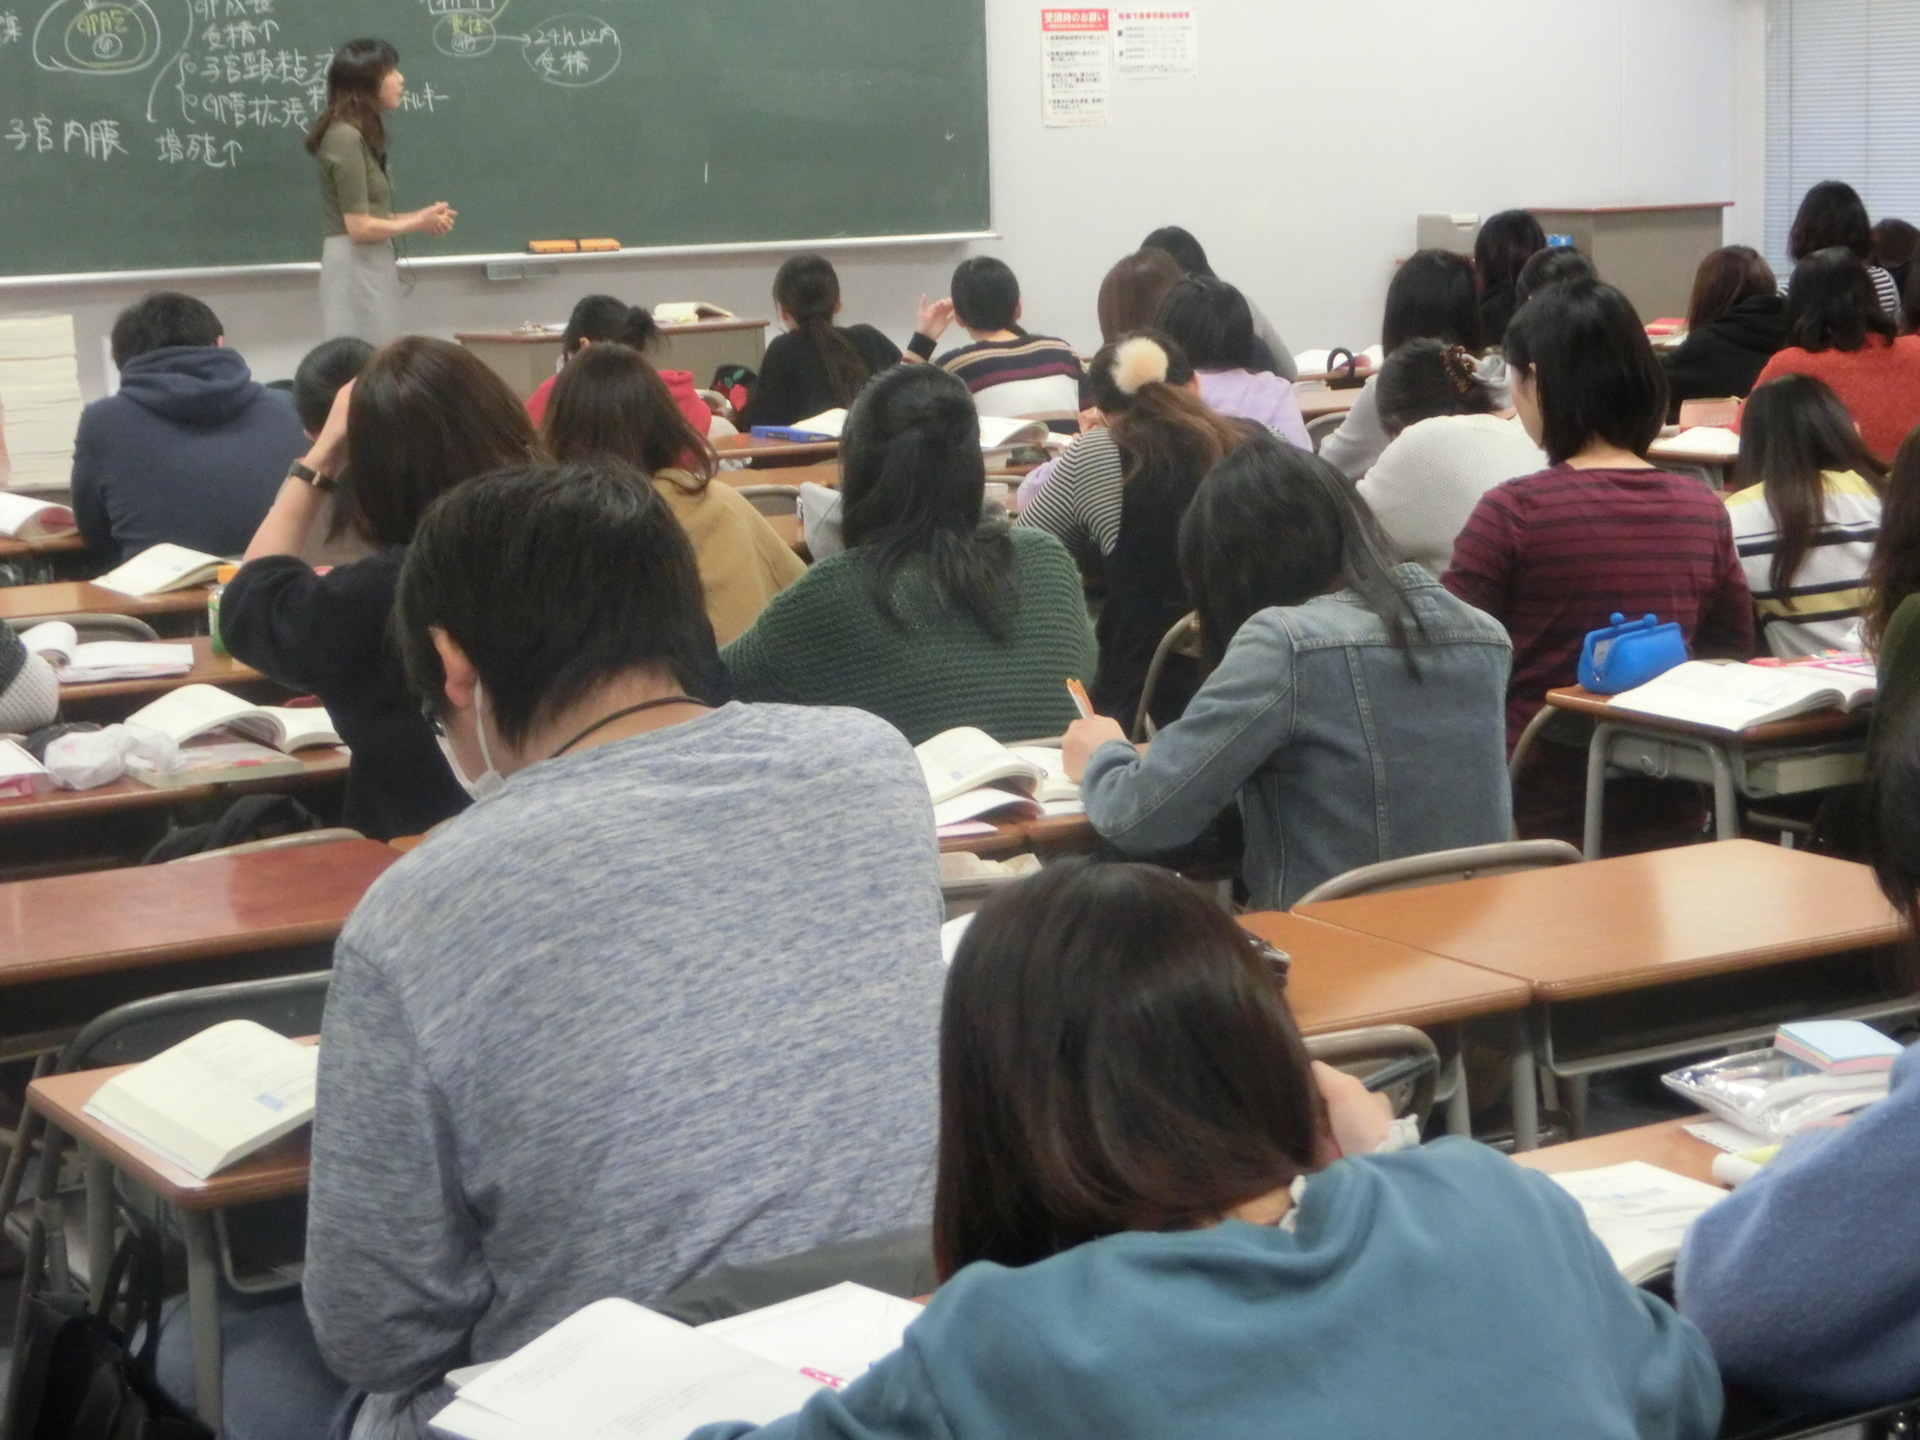 5 東京アカデミー熊本校 教員採用試験 看護師国家試験 公務員試験 のブログ